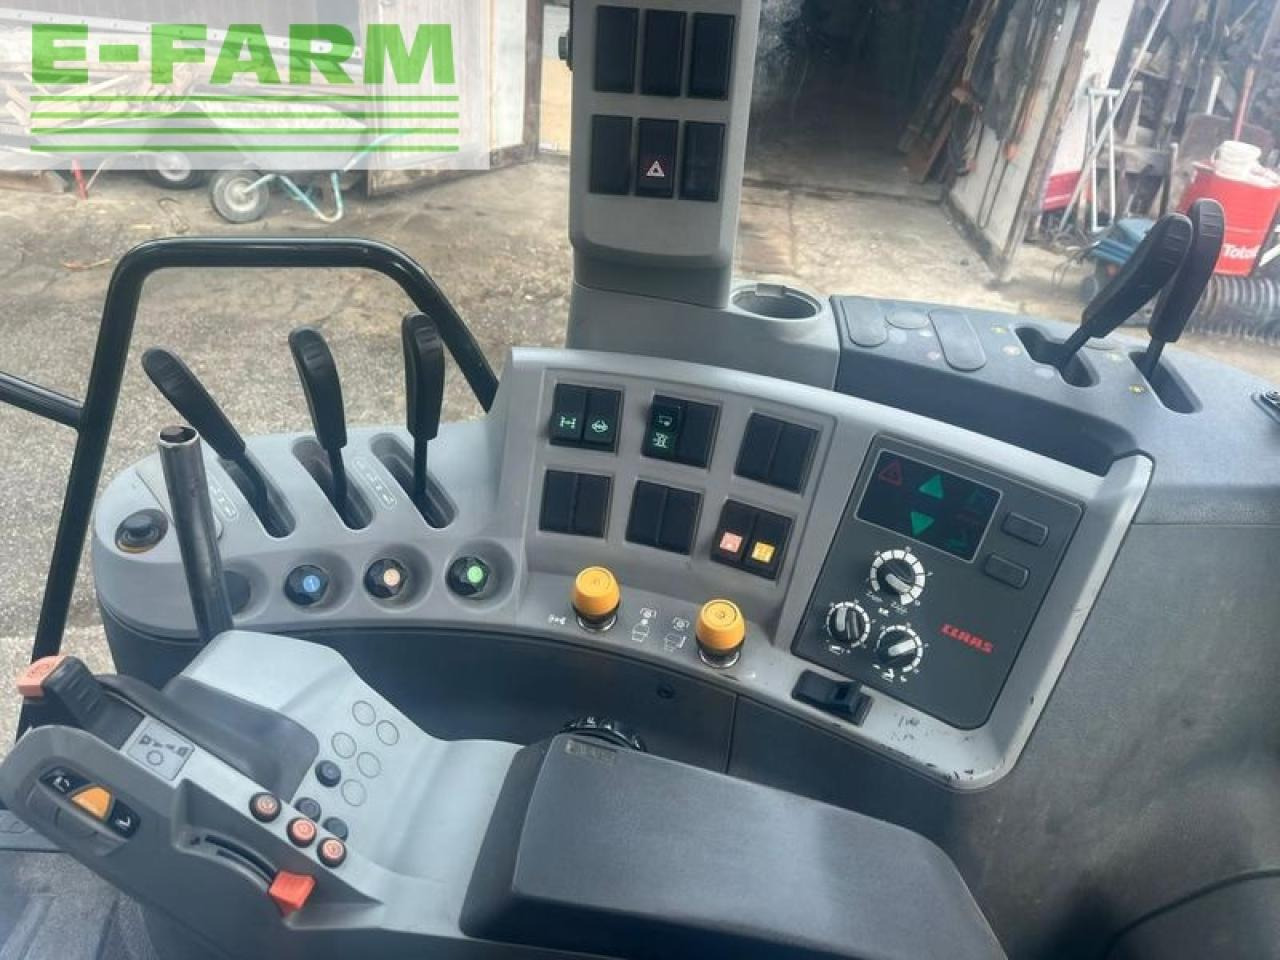 Farm tractor CLAAS arion 520